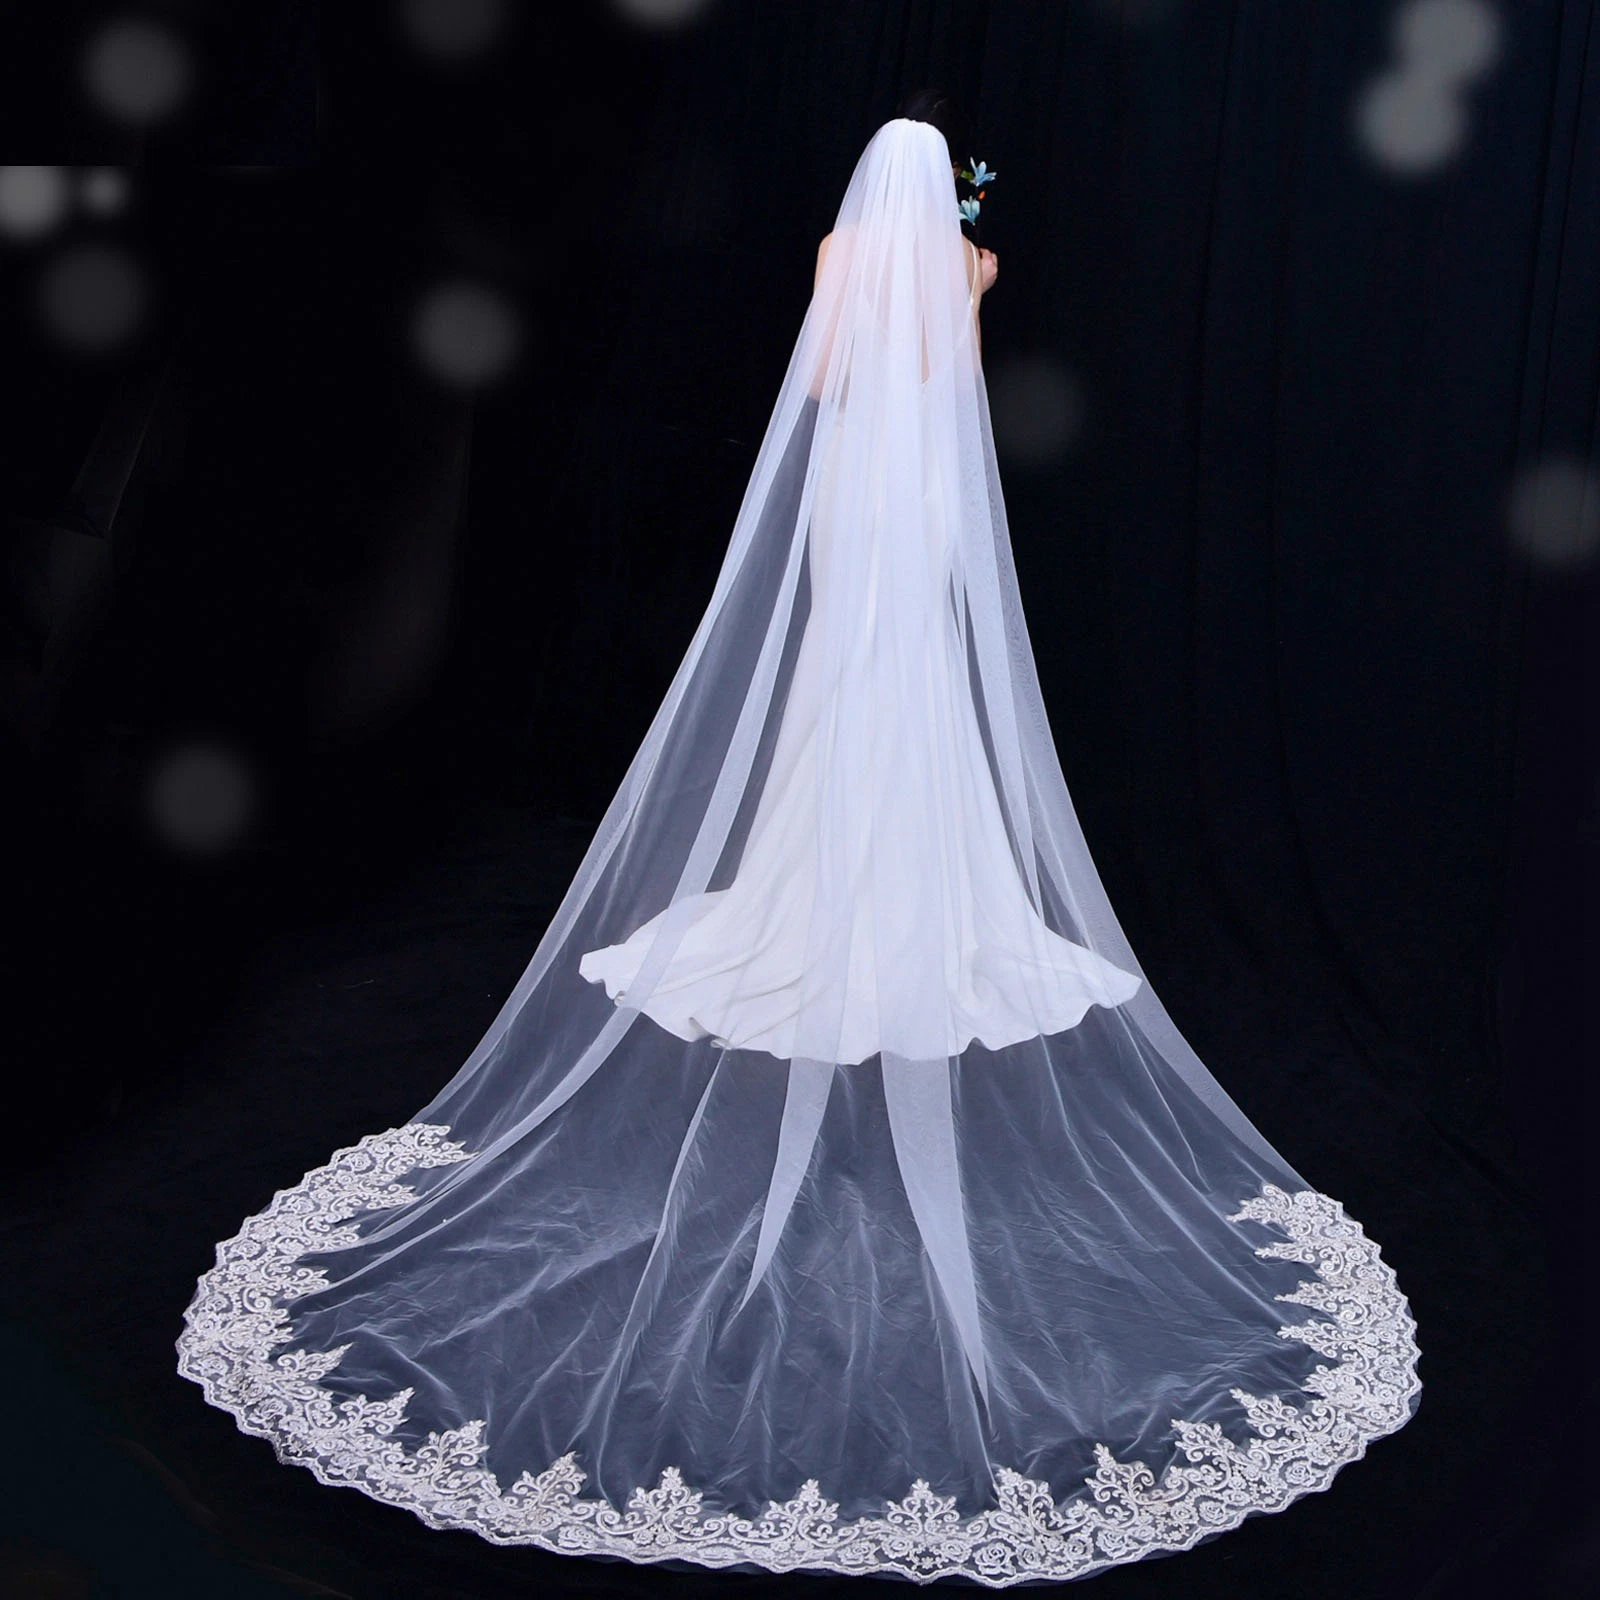 Yp99 Bridal Wedding Long Veil 3 Meters Bautiful Lace Veil Wedding Accessory